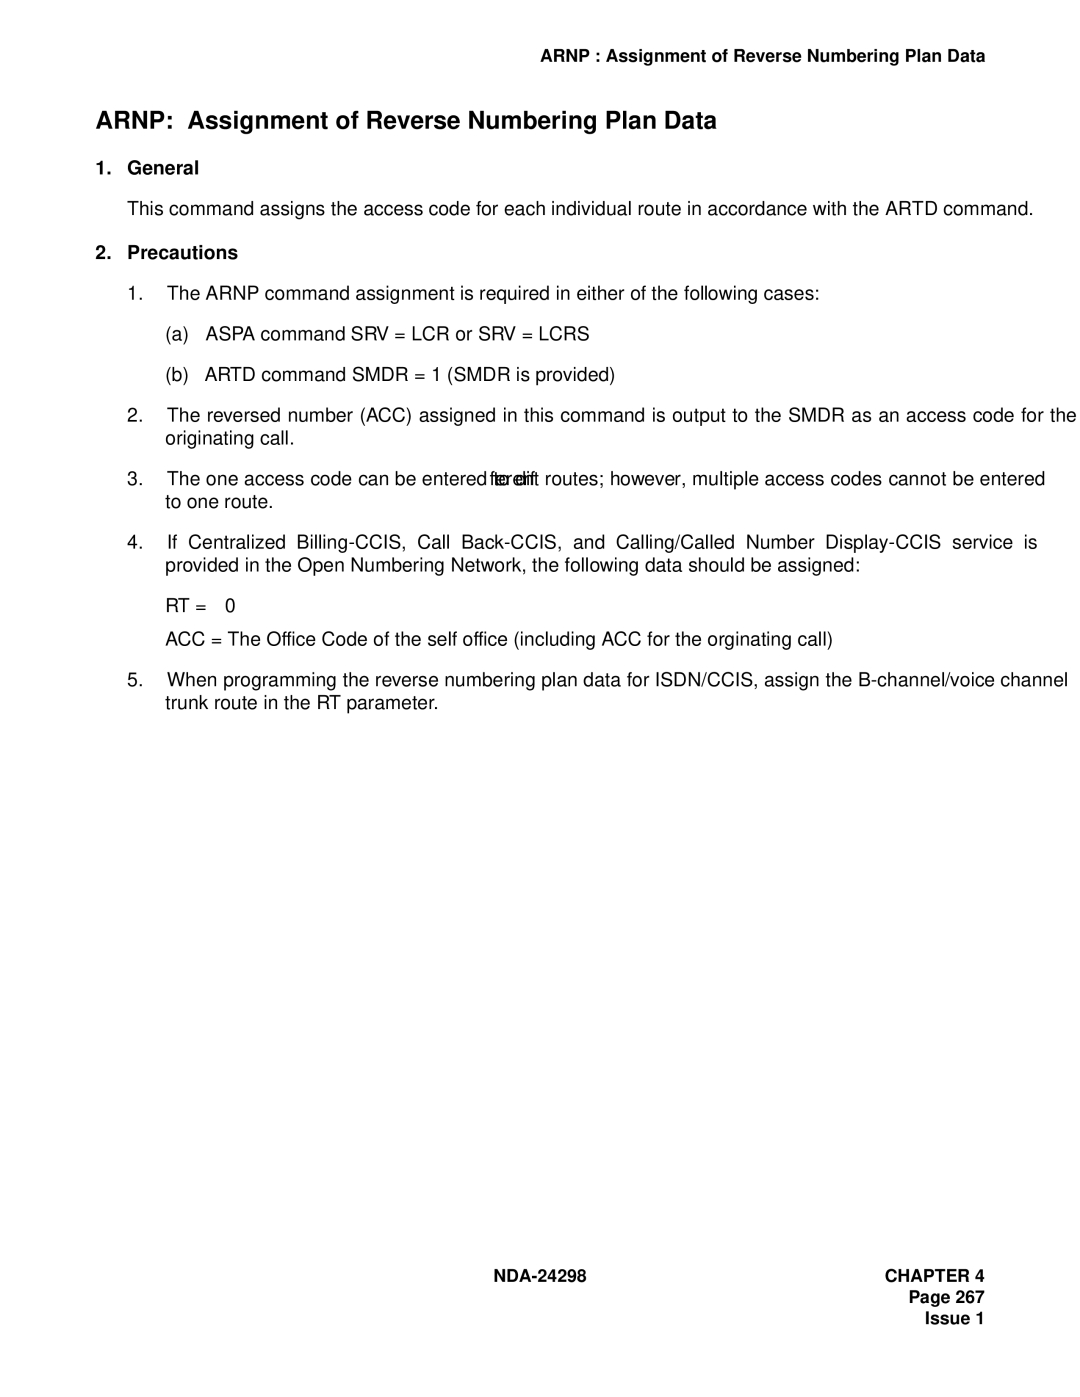 NEC NDA-24298 manual Arnp Assignment of Reverse Numbering Plan Data 